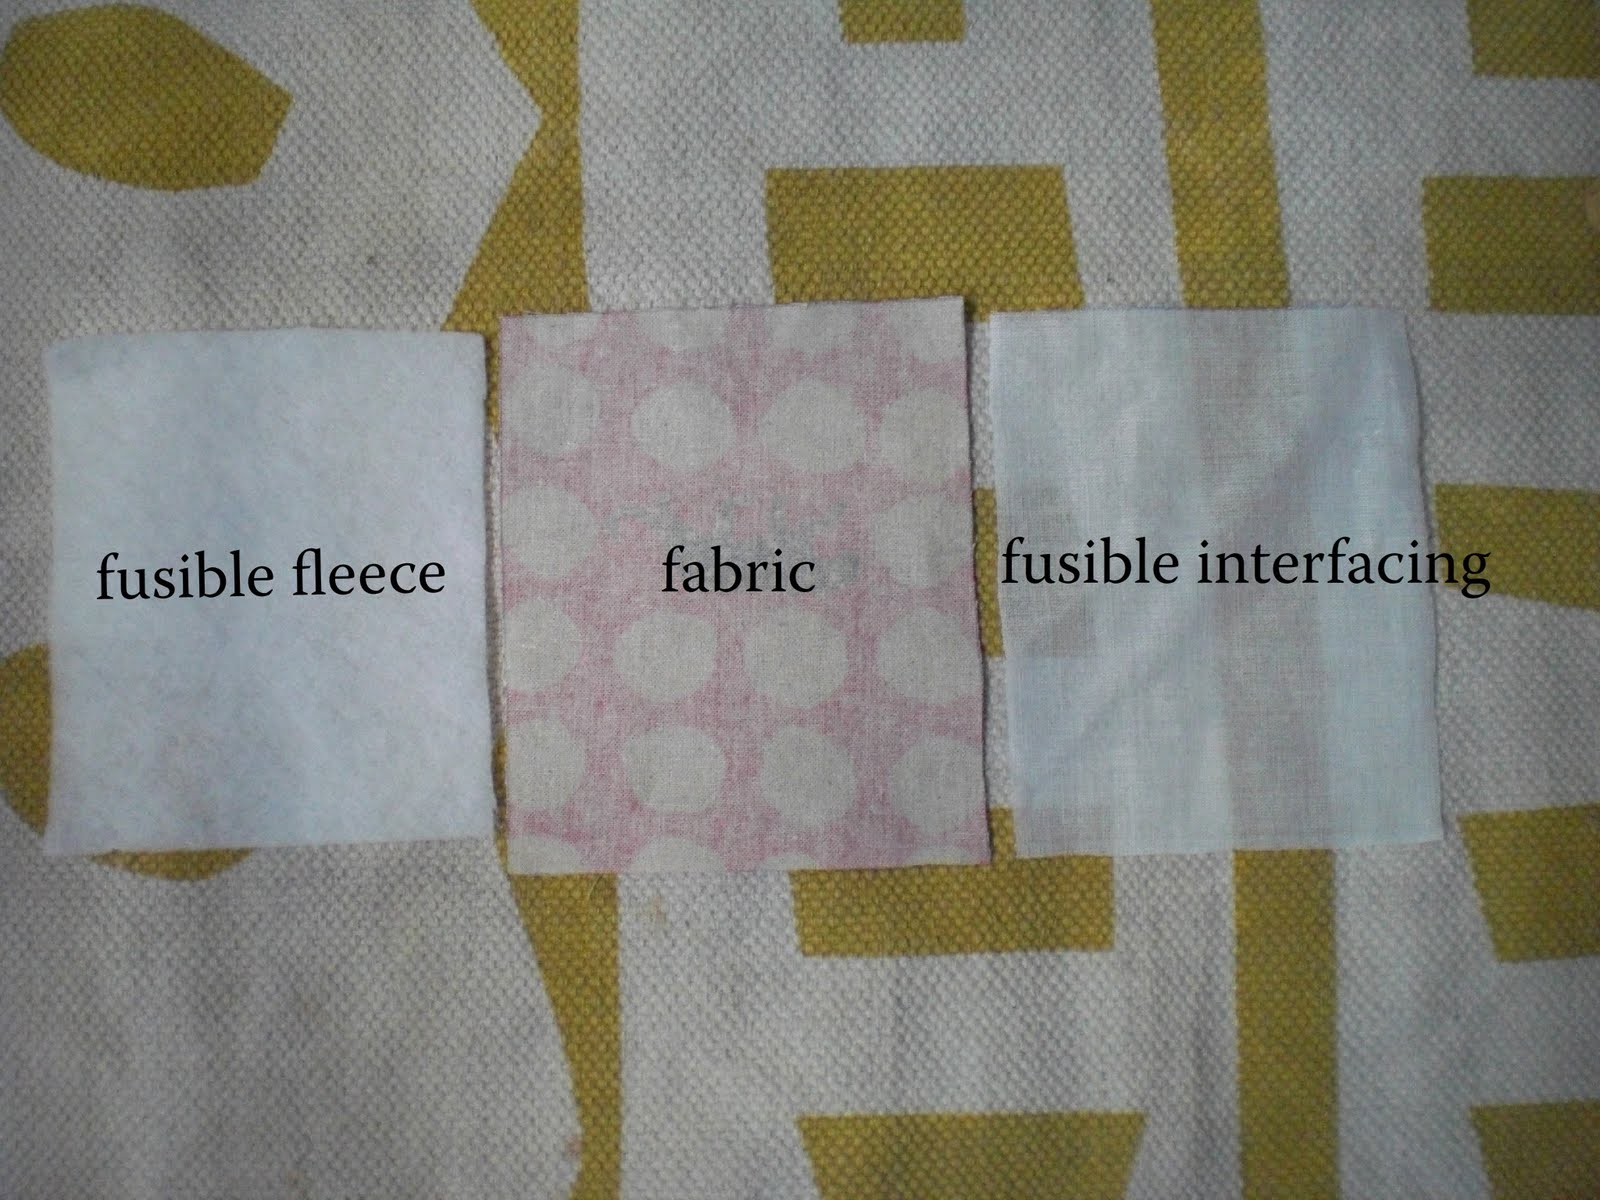 Tutorial using fusible fleece